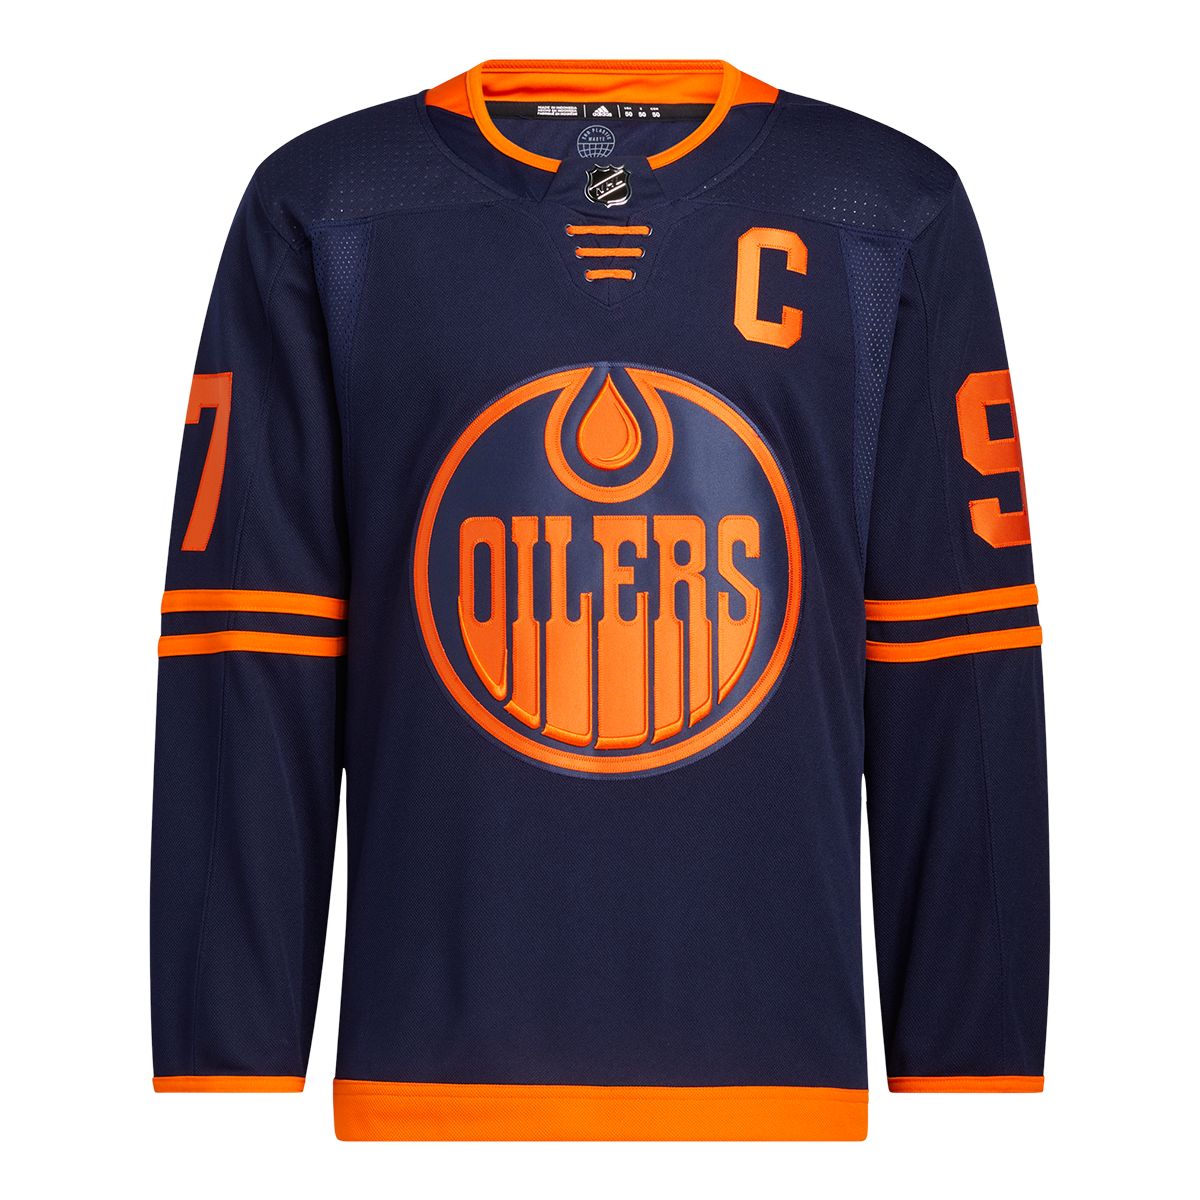 Custom Jersey, Adidas Custom Oilers Jerseys, Gear, Apparel - Oilers Shop